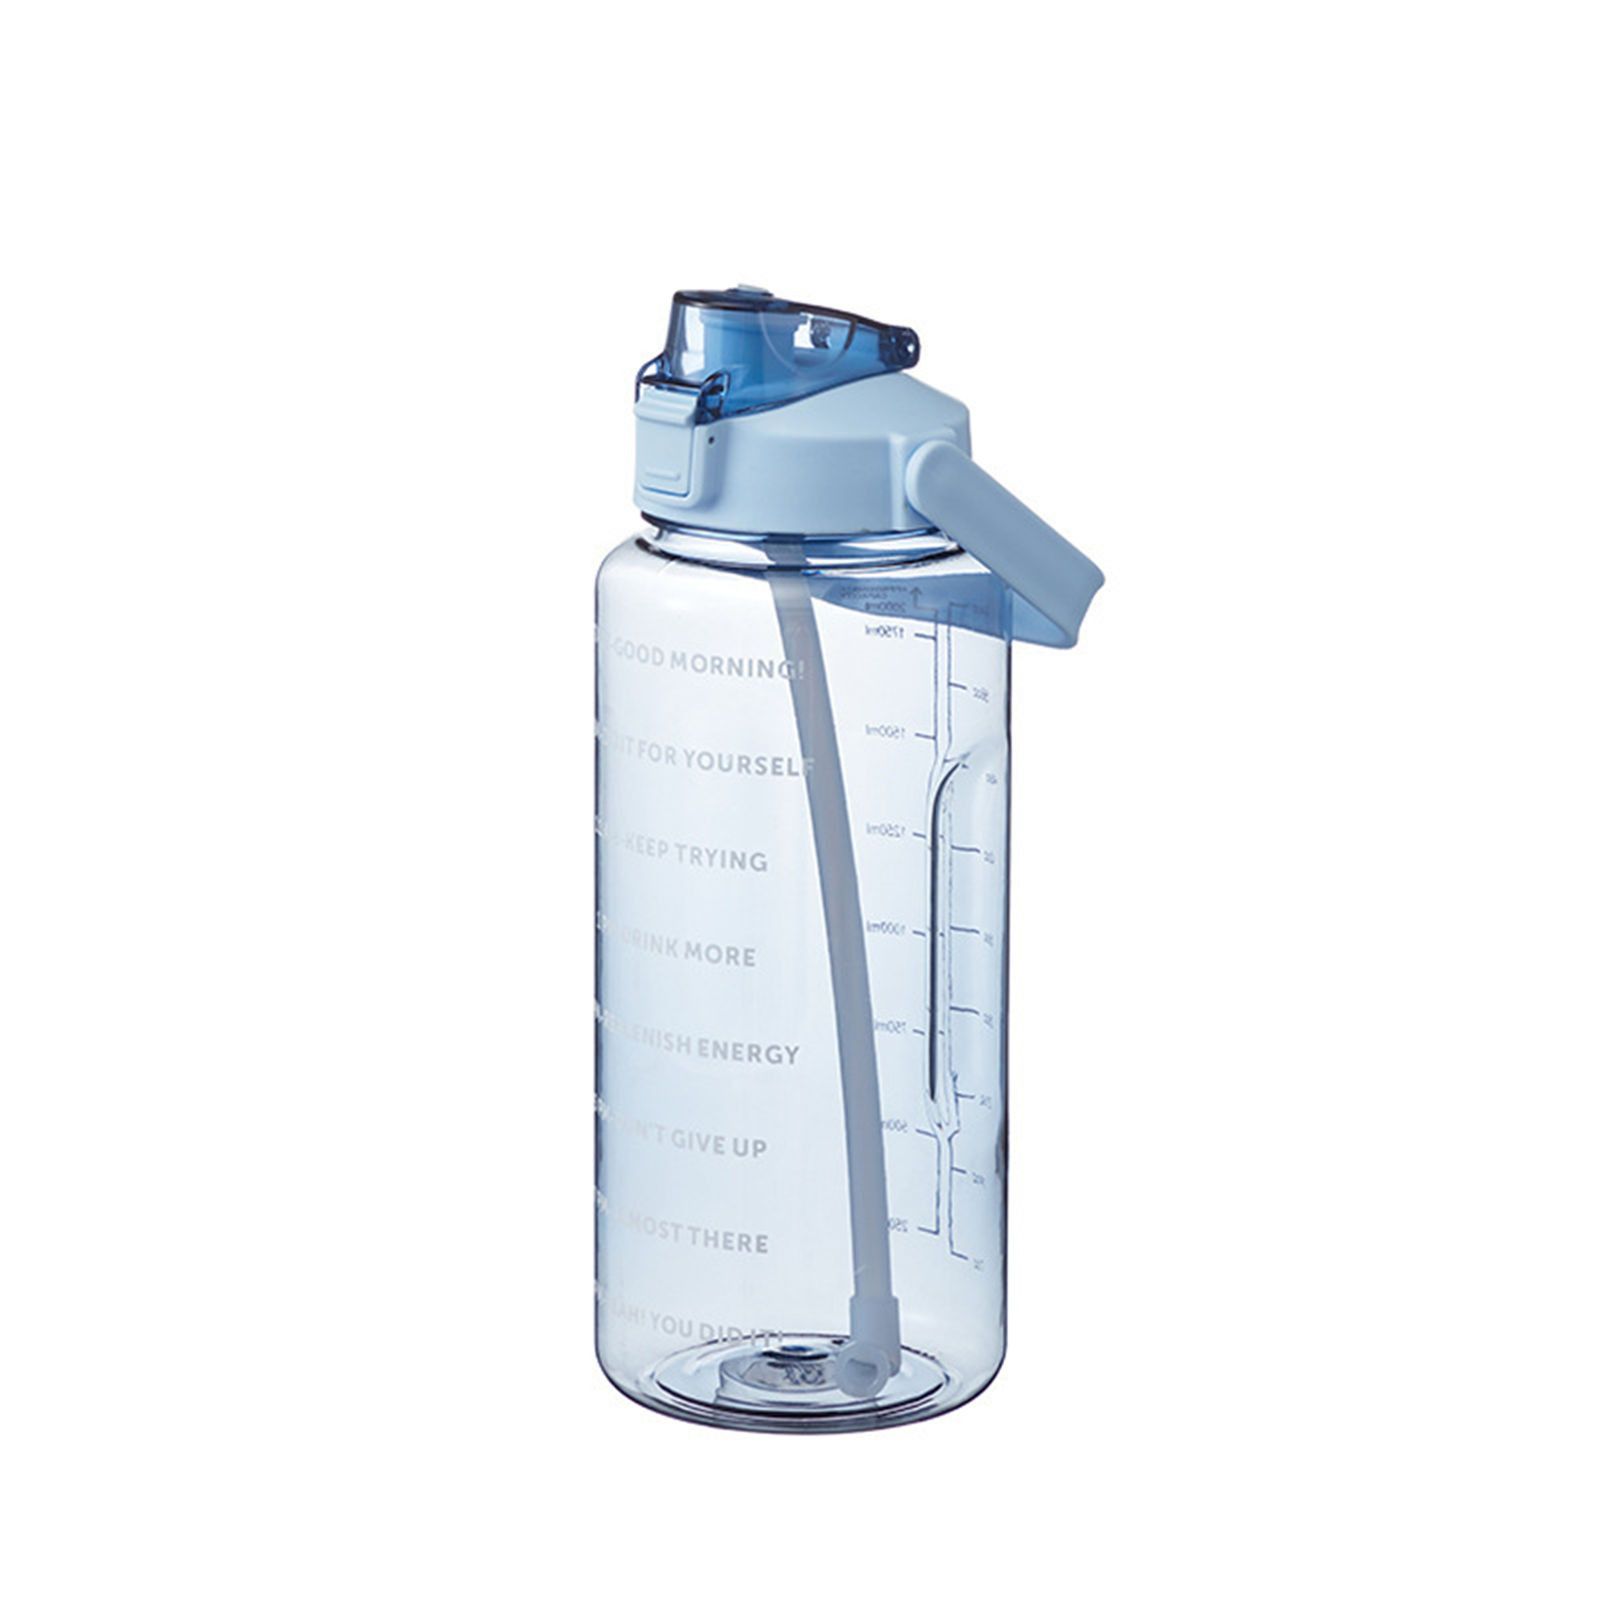 SINGER botella de agua caliente 2l láminas 1 cara azul compra